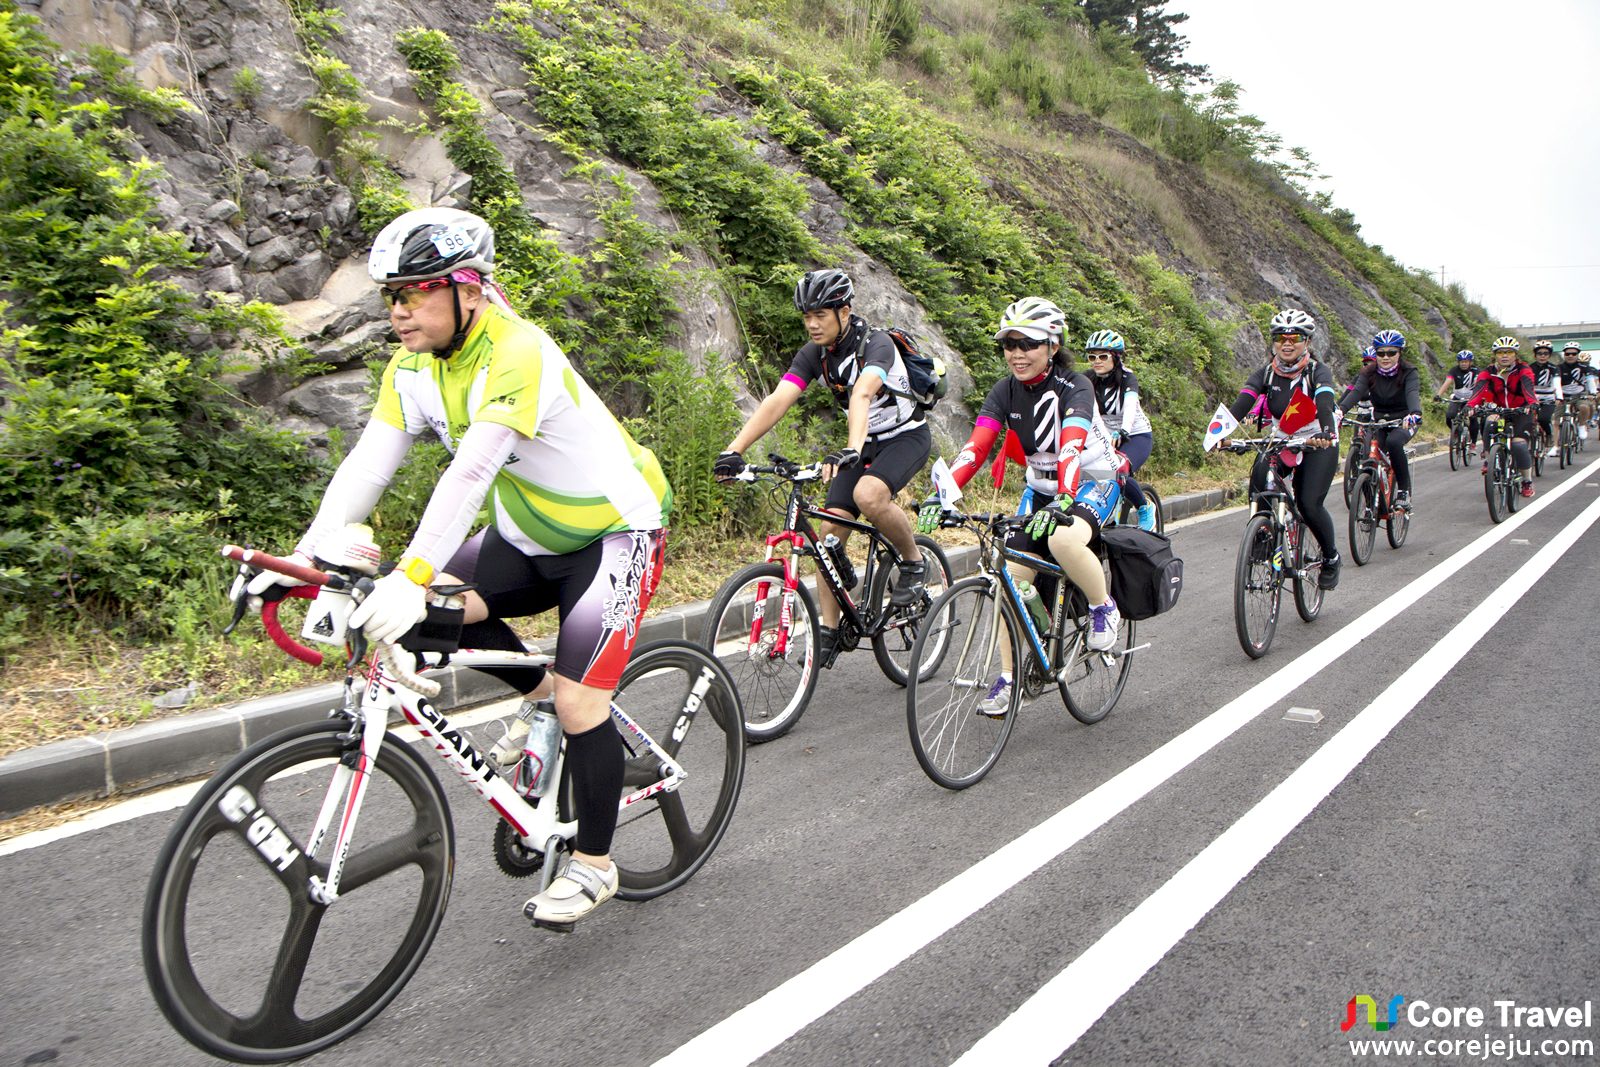 Jeju 6D5N Cycling Tour